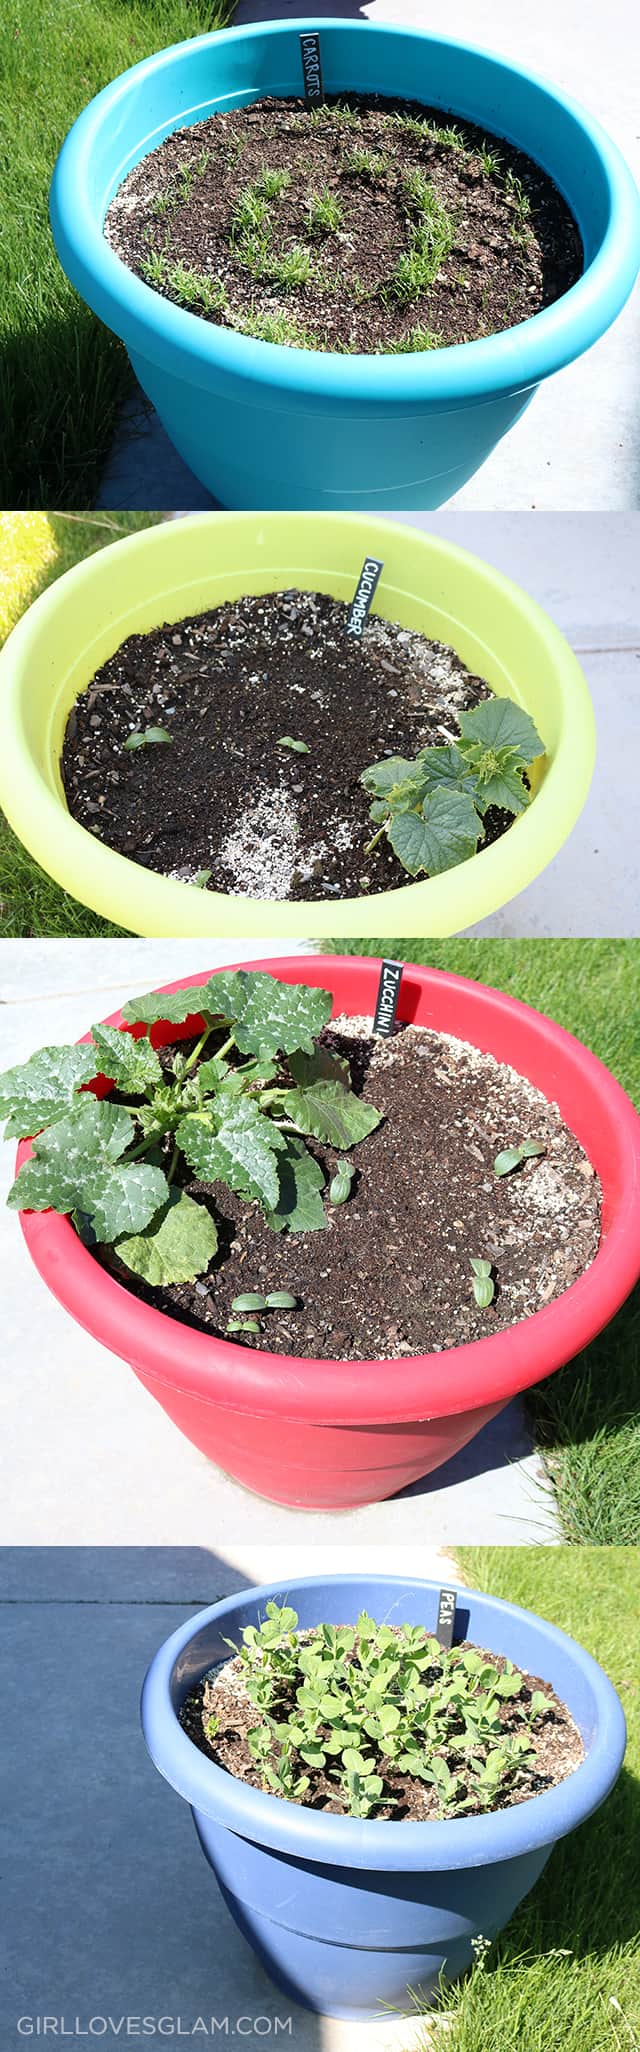 Vegetable Pots Rental Space Gardening